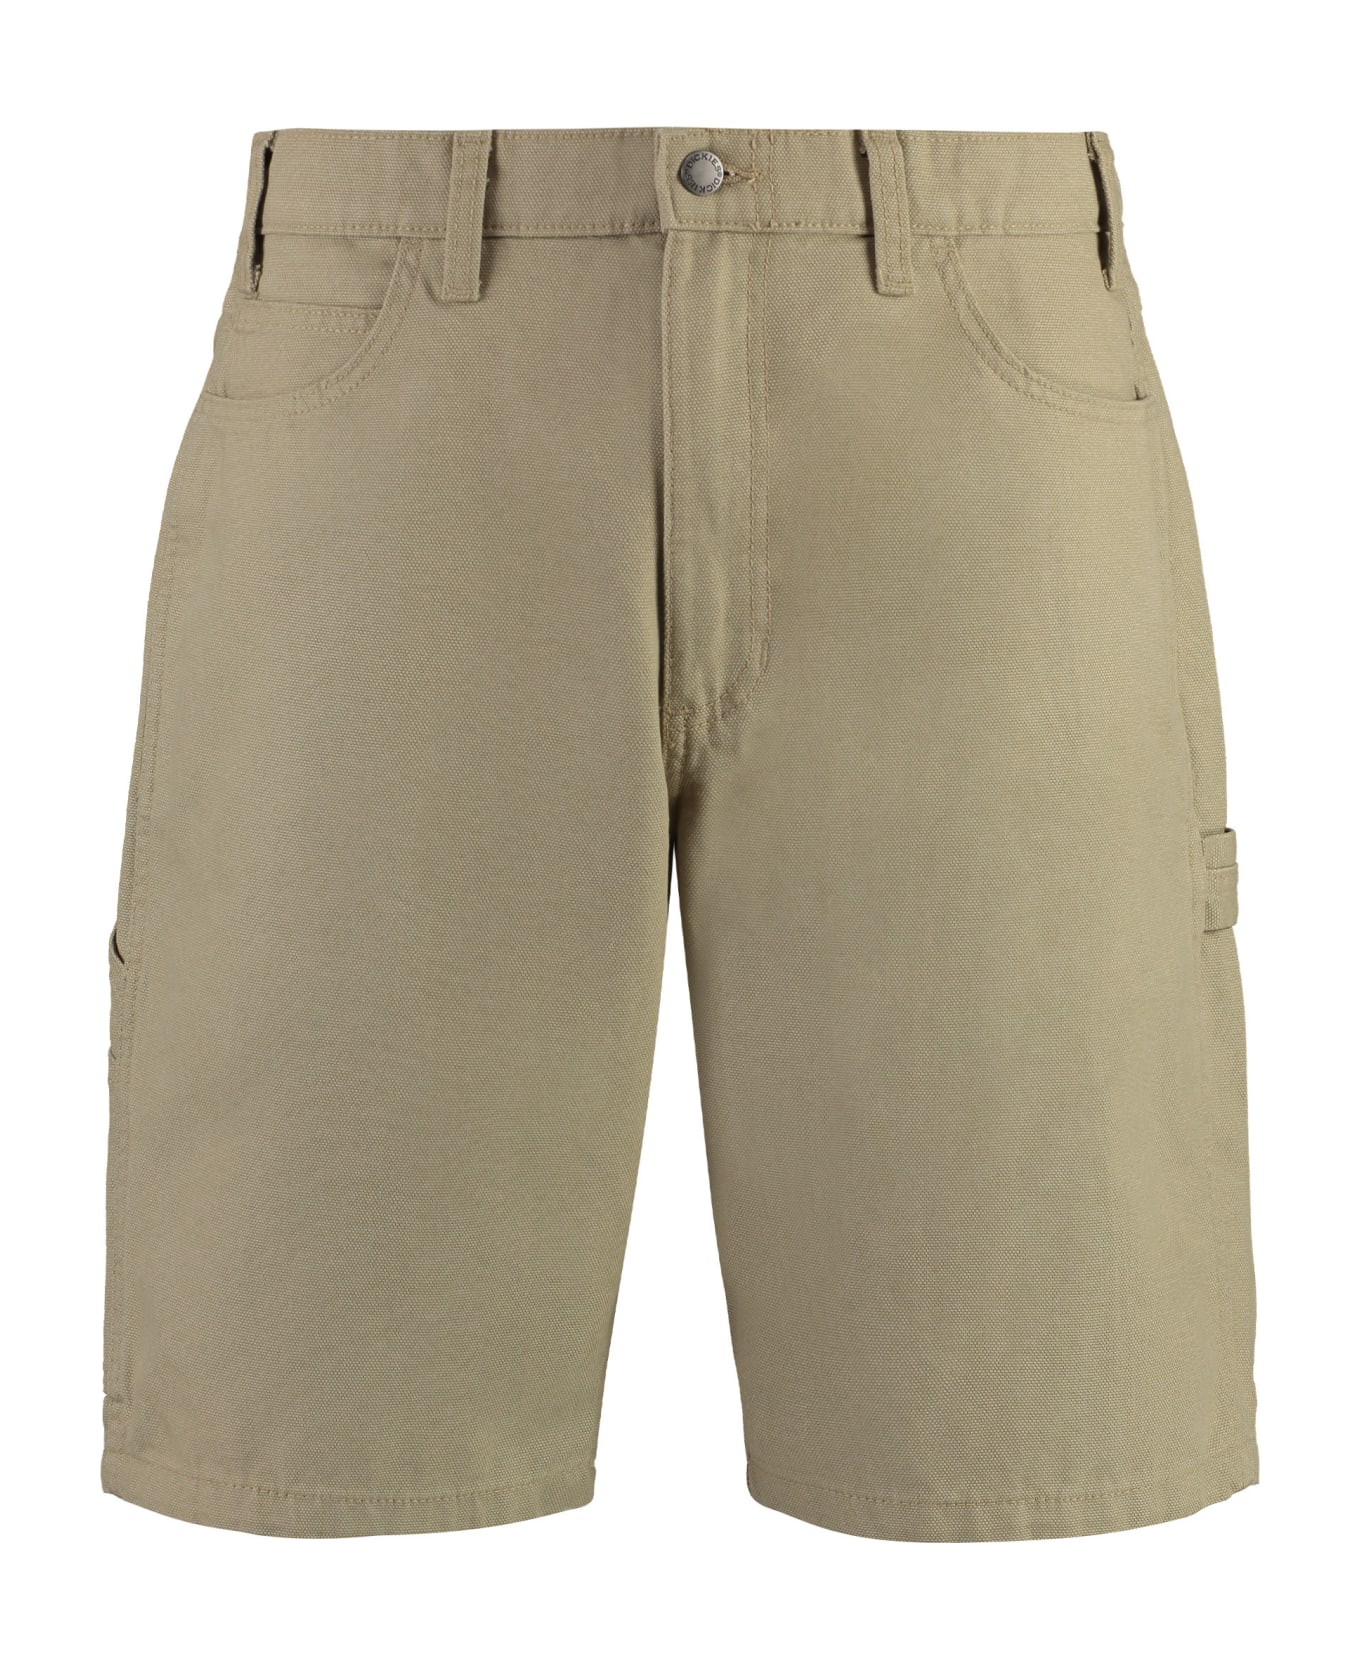 Dickies Duck Cotton Shorts - Beige